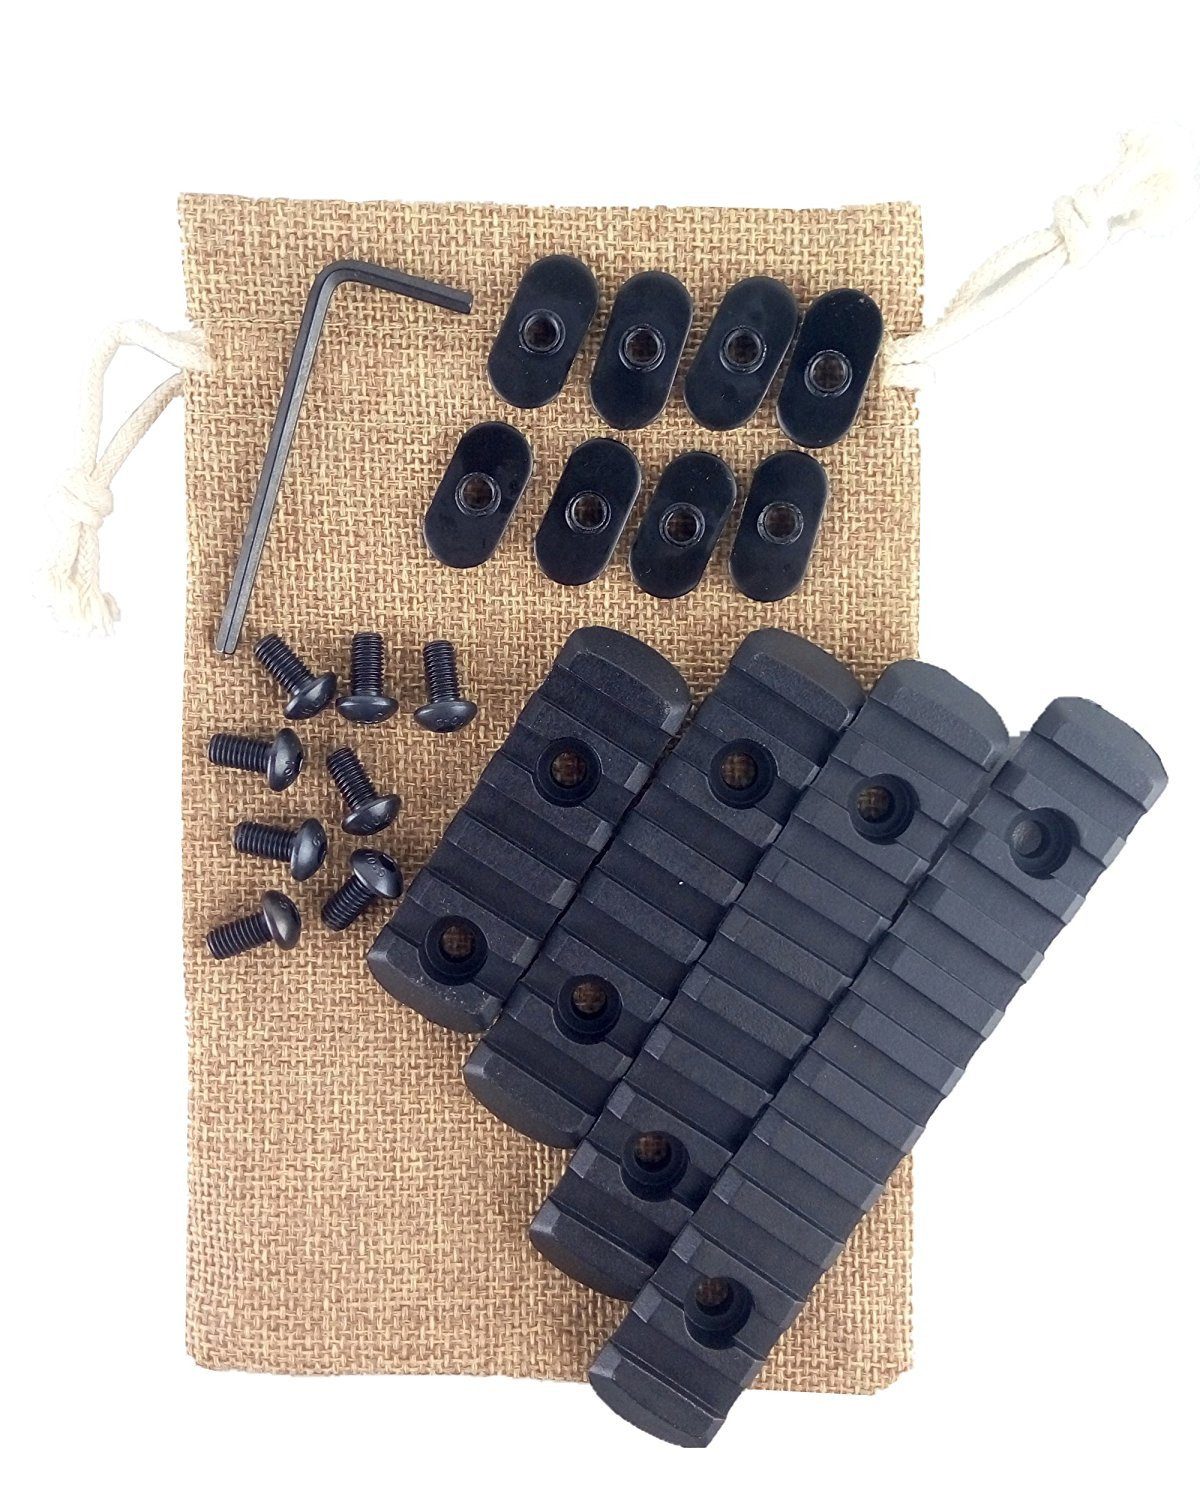 Polymer Rail Section Kit L5 L4 L3 L2 Sizes Rail Sets ohhunt Black 